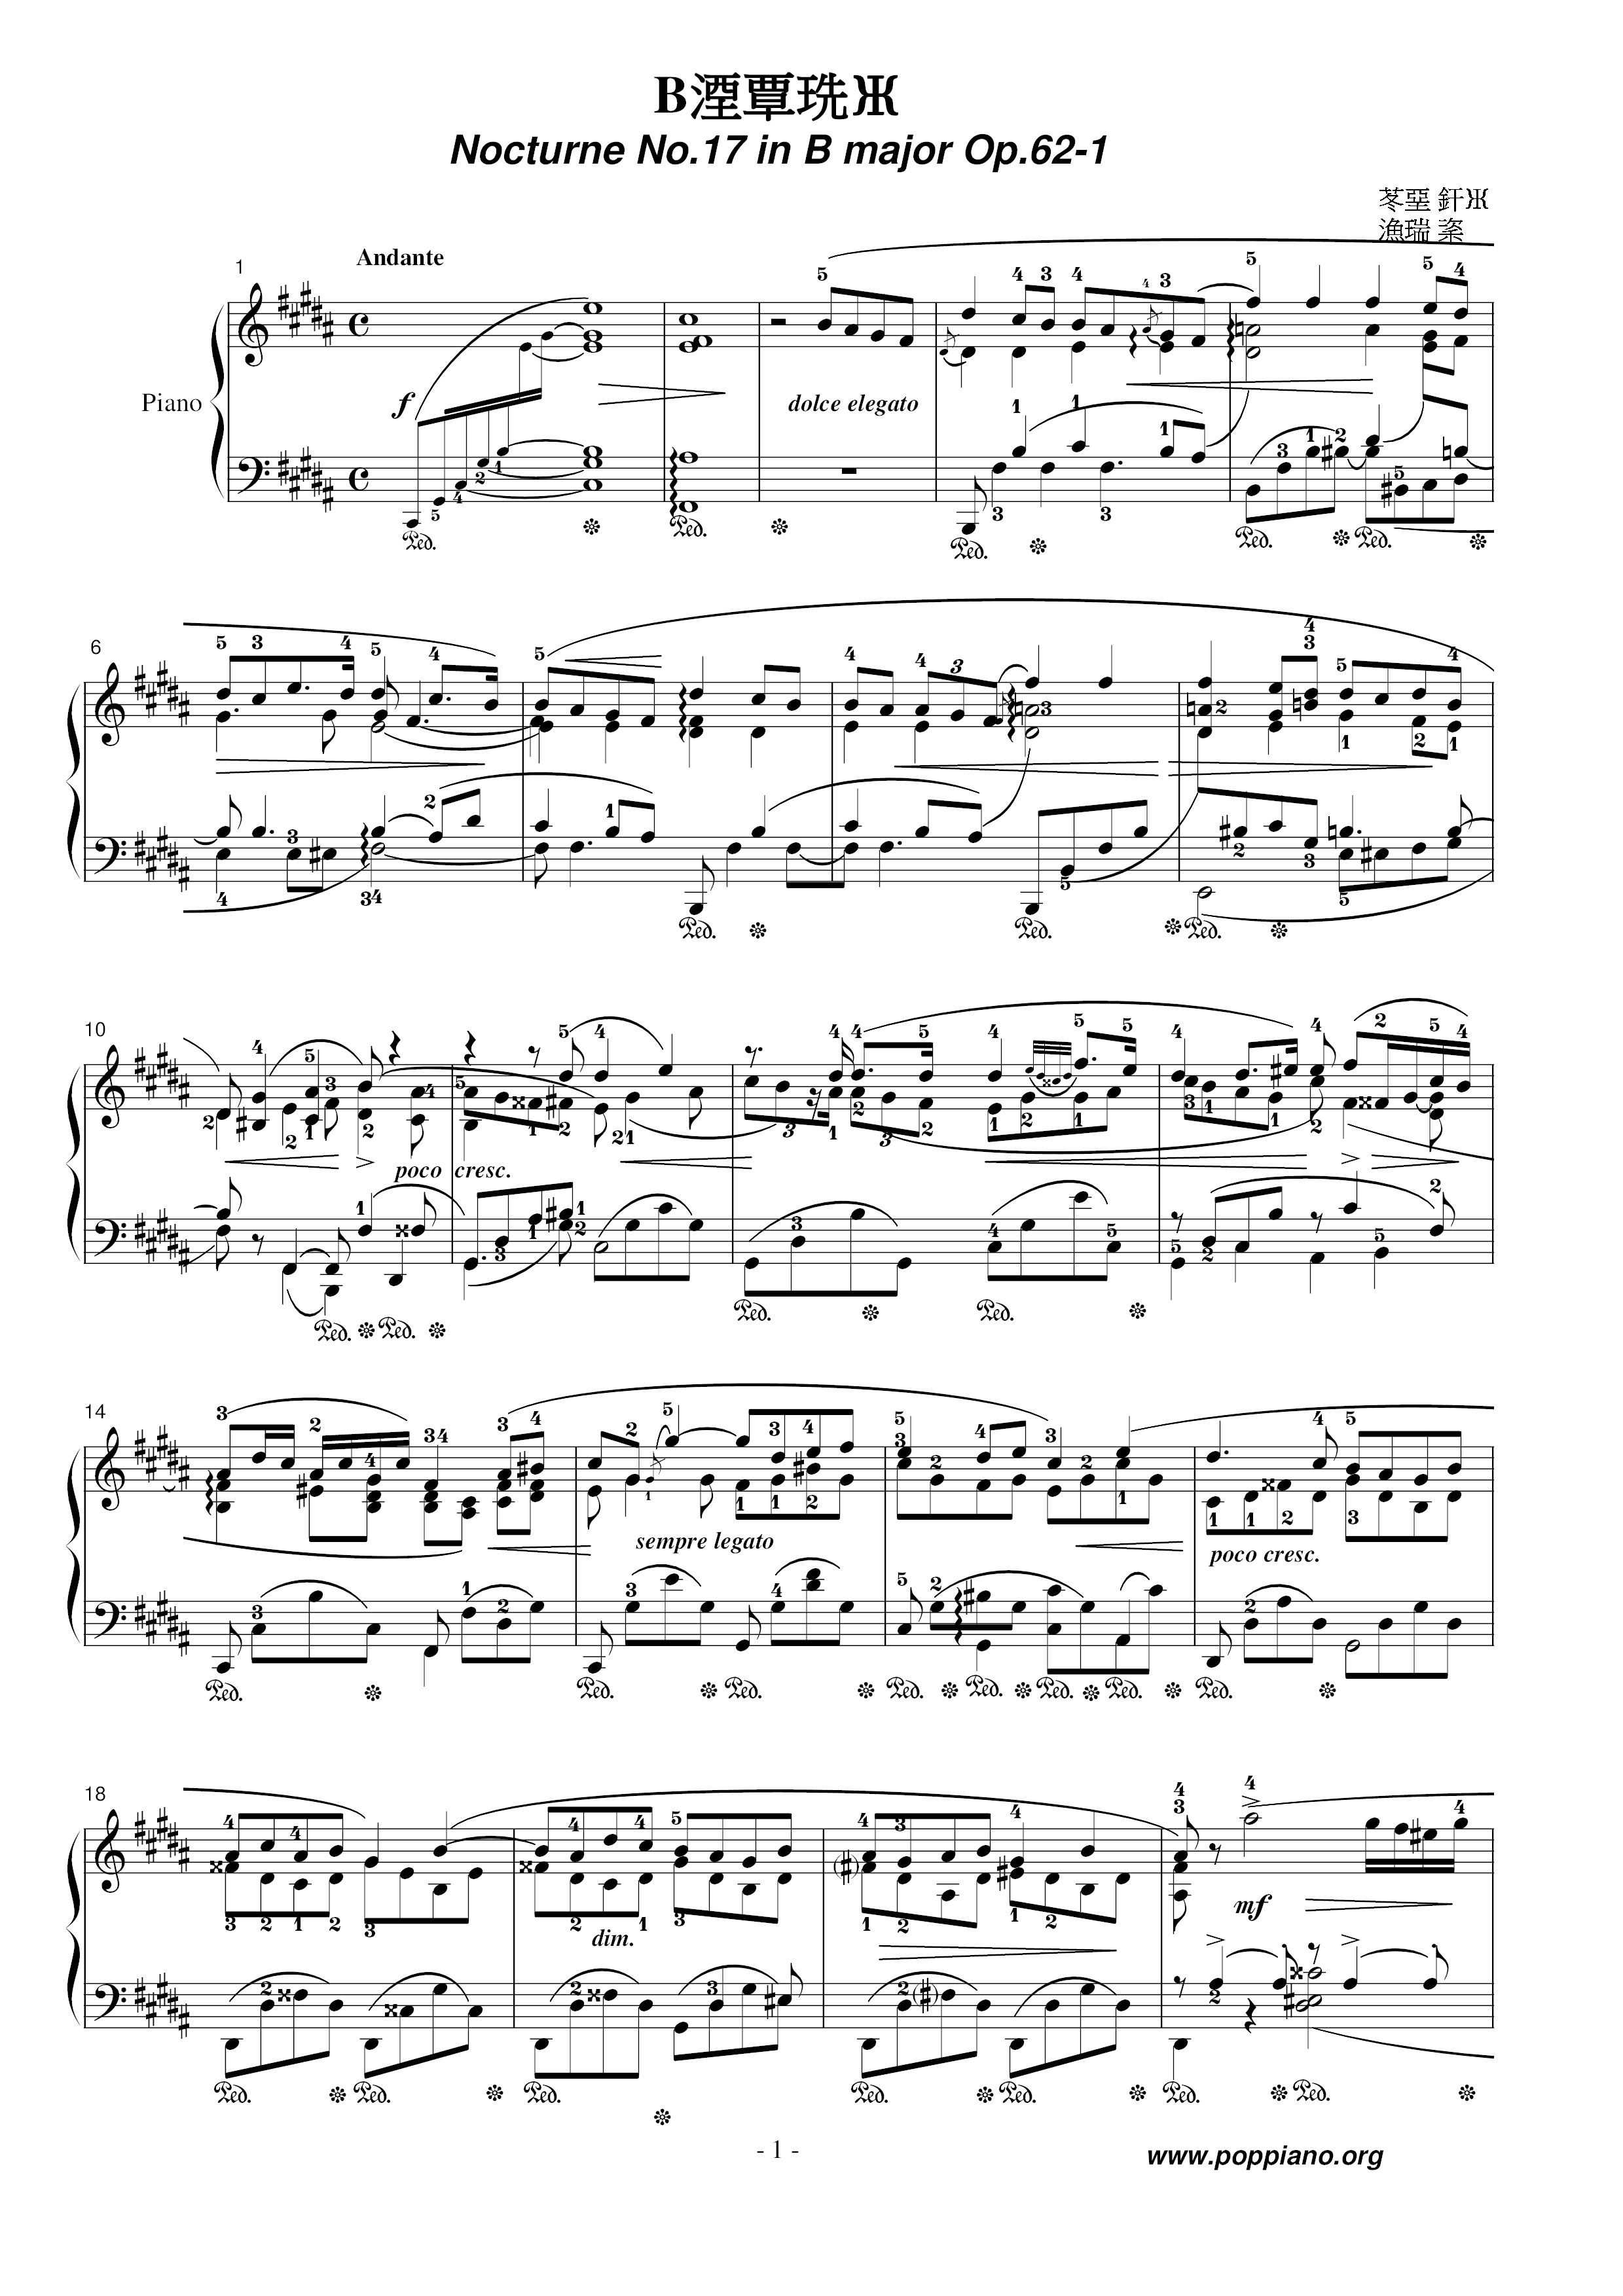 Nocturne No. 17ピアノ譜